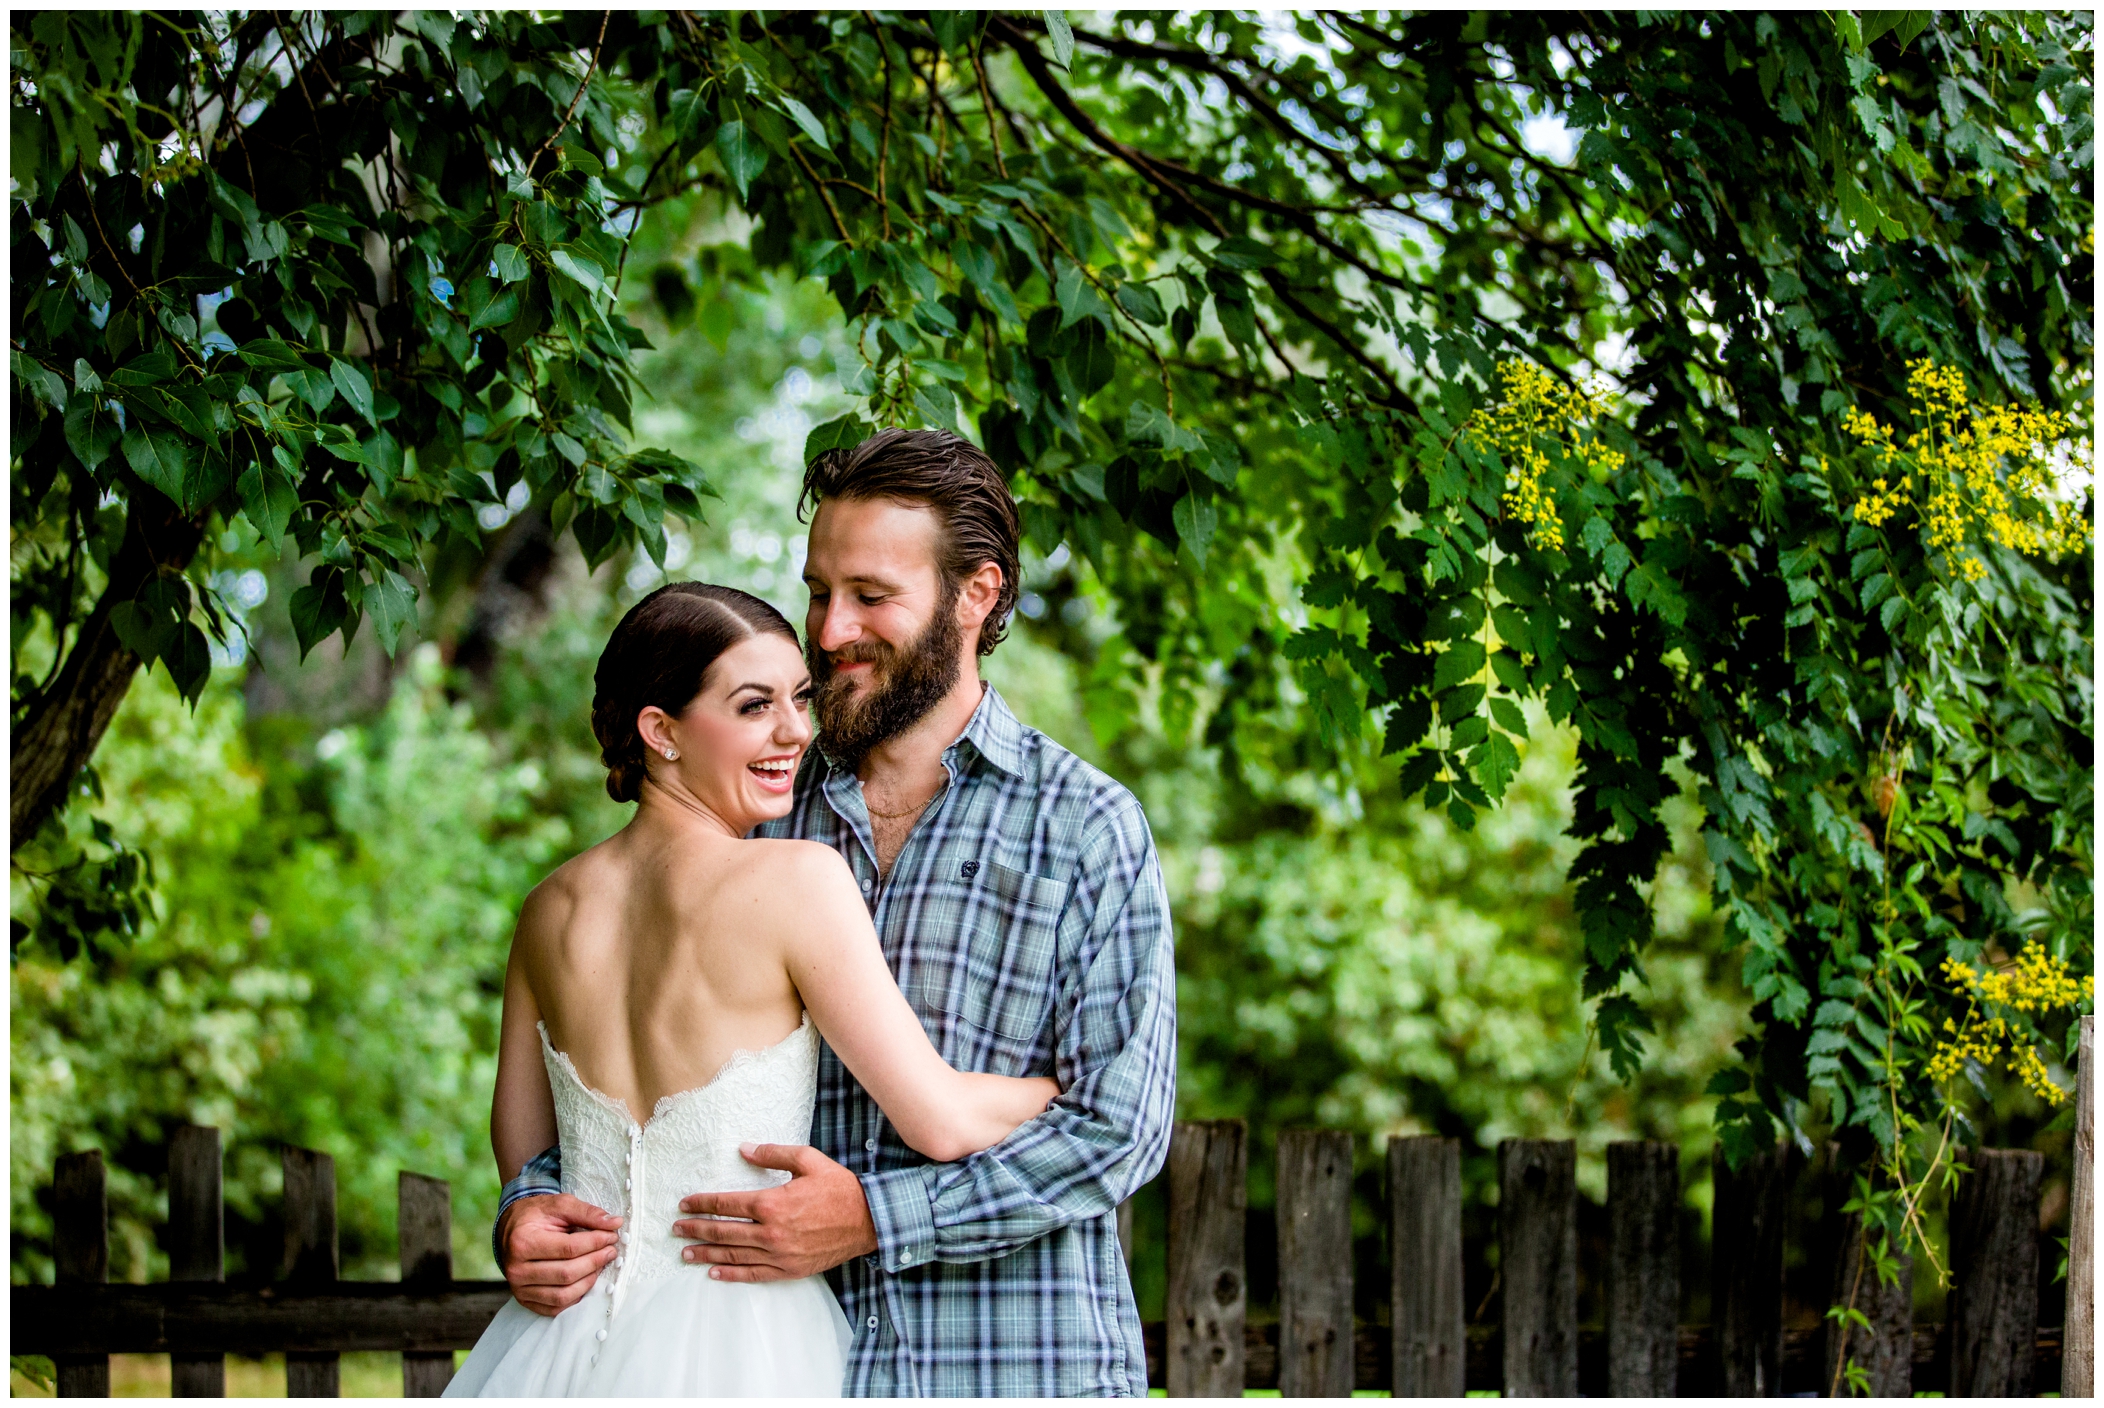 Longmont wedding photography at Lone Hawk Farm by Plum Pretty Photography.